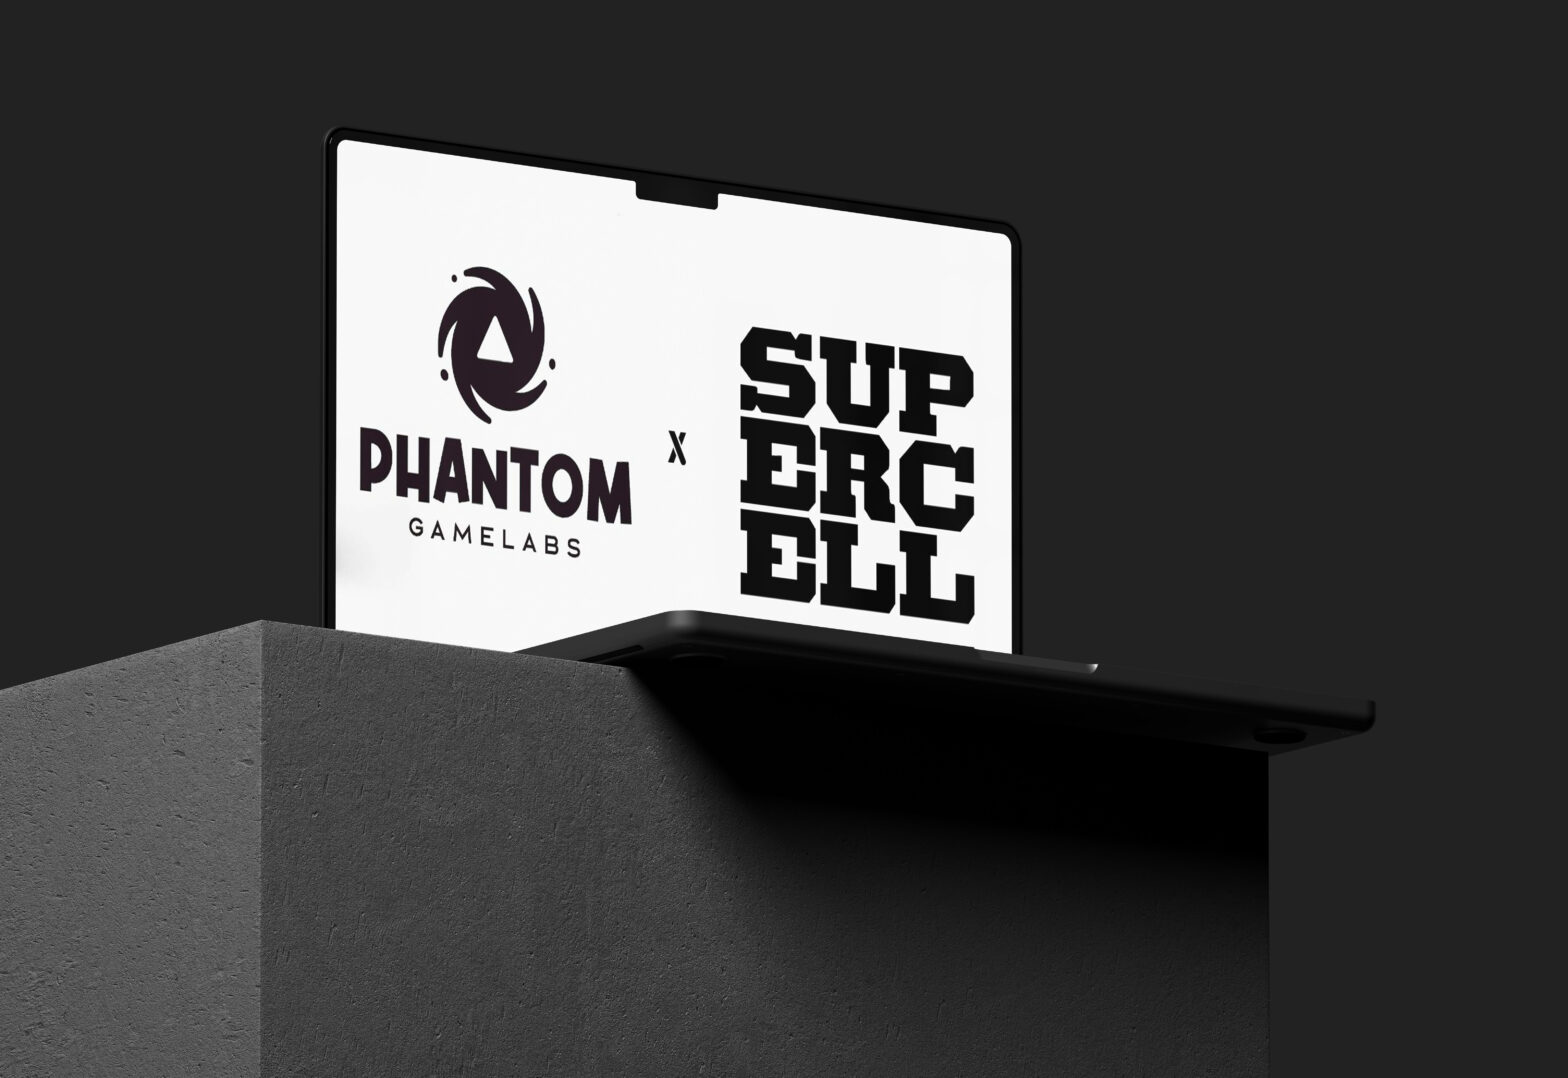 Phantom Gamelabs receives funding from Supercell